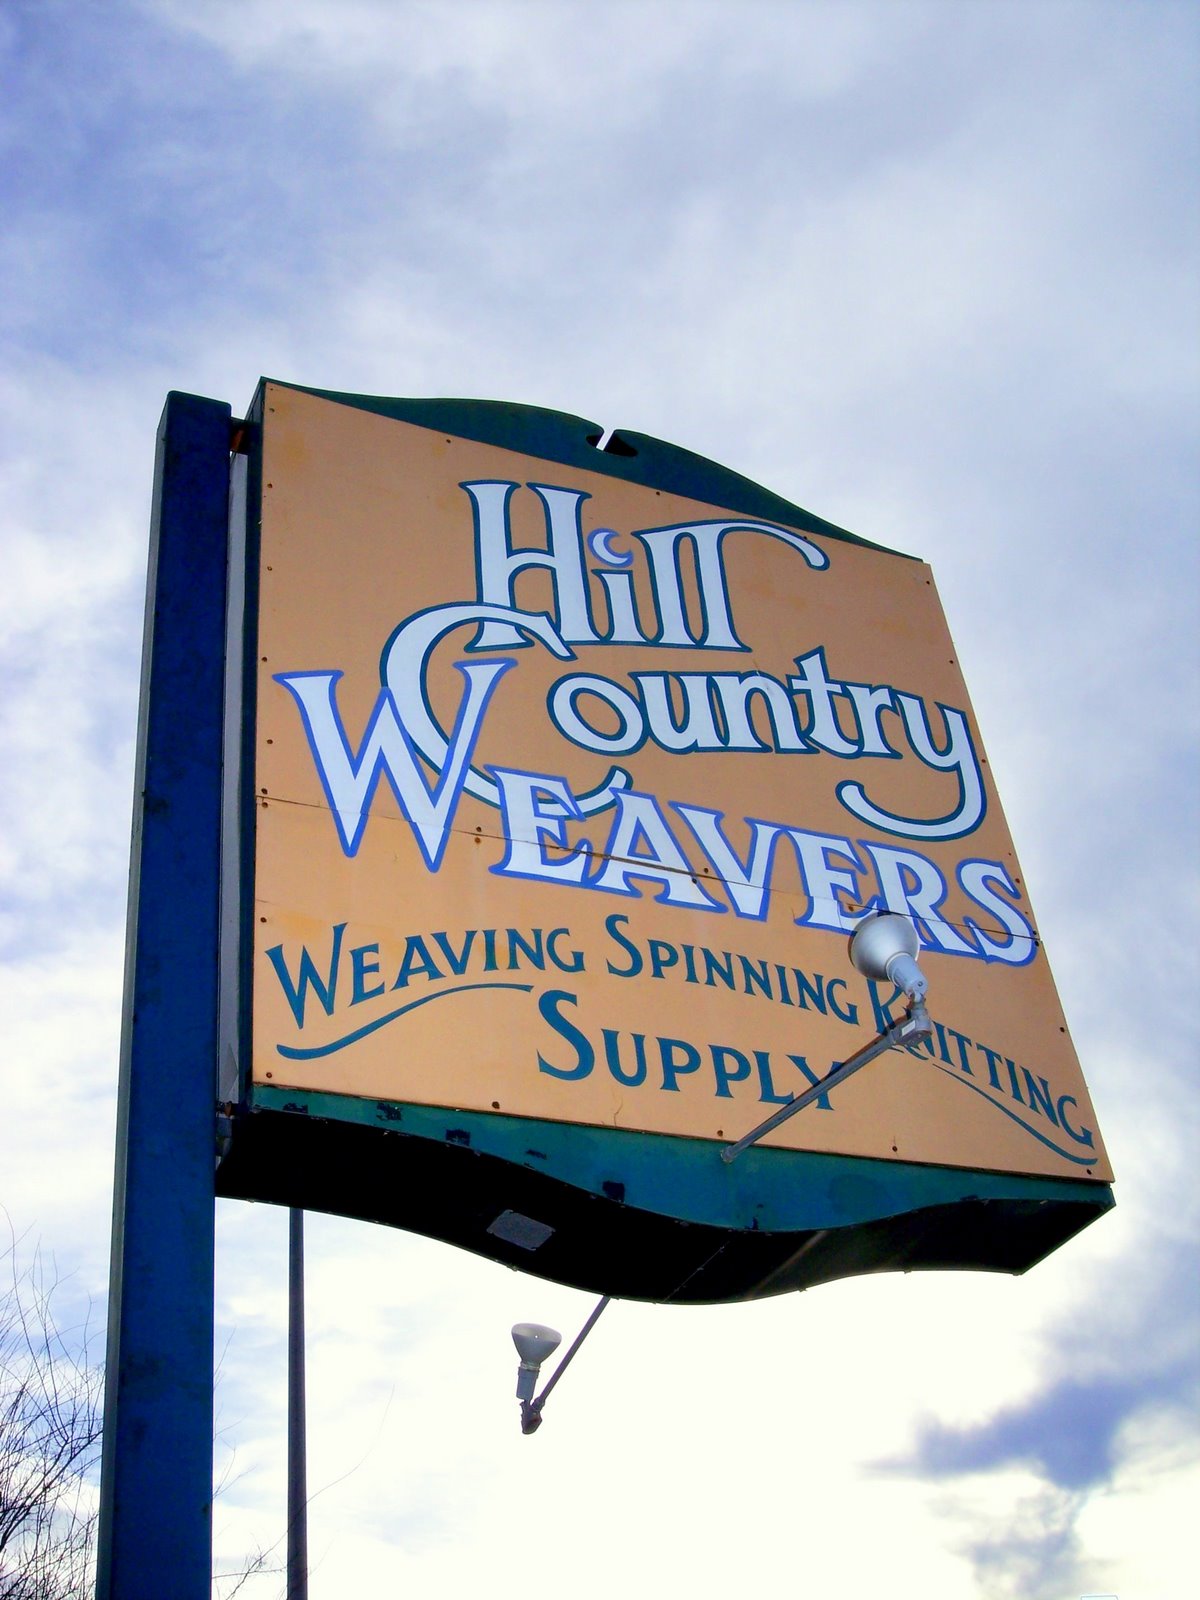 [hill+country+weavers.jpg]